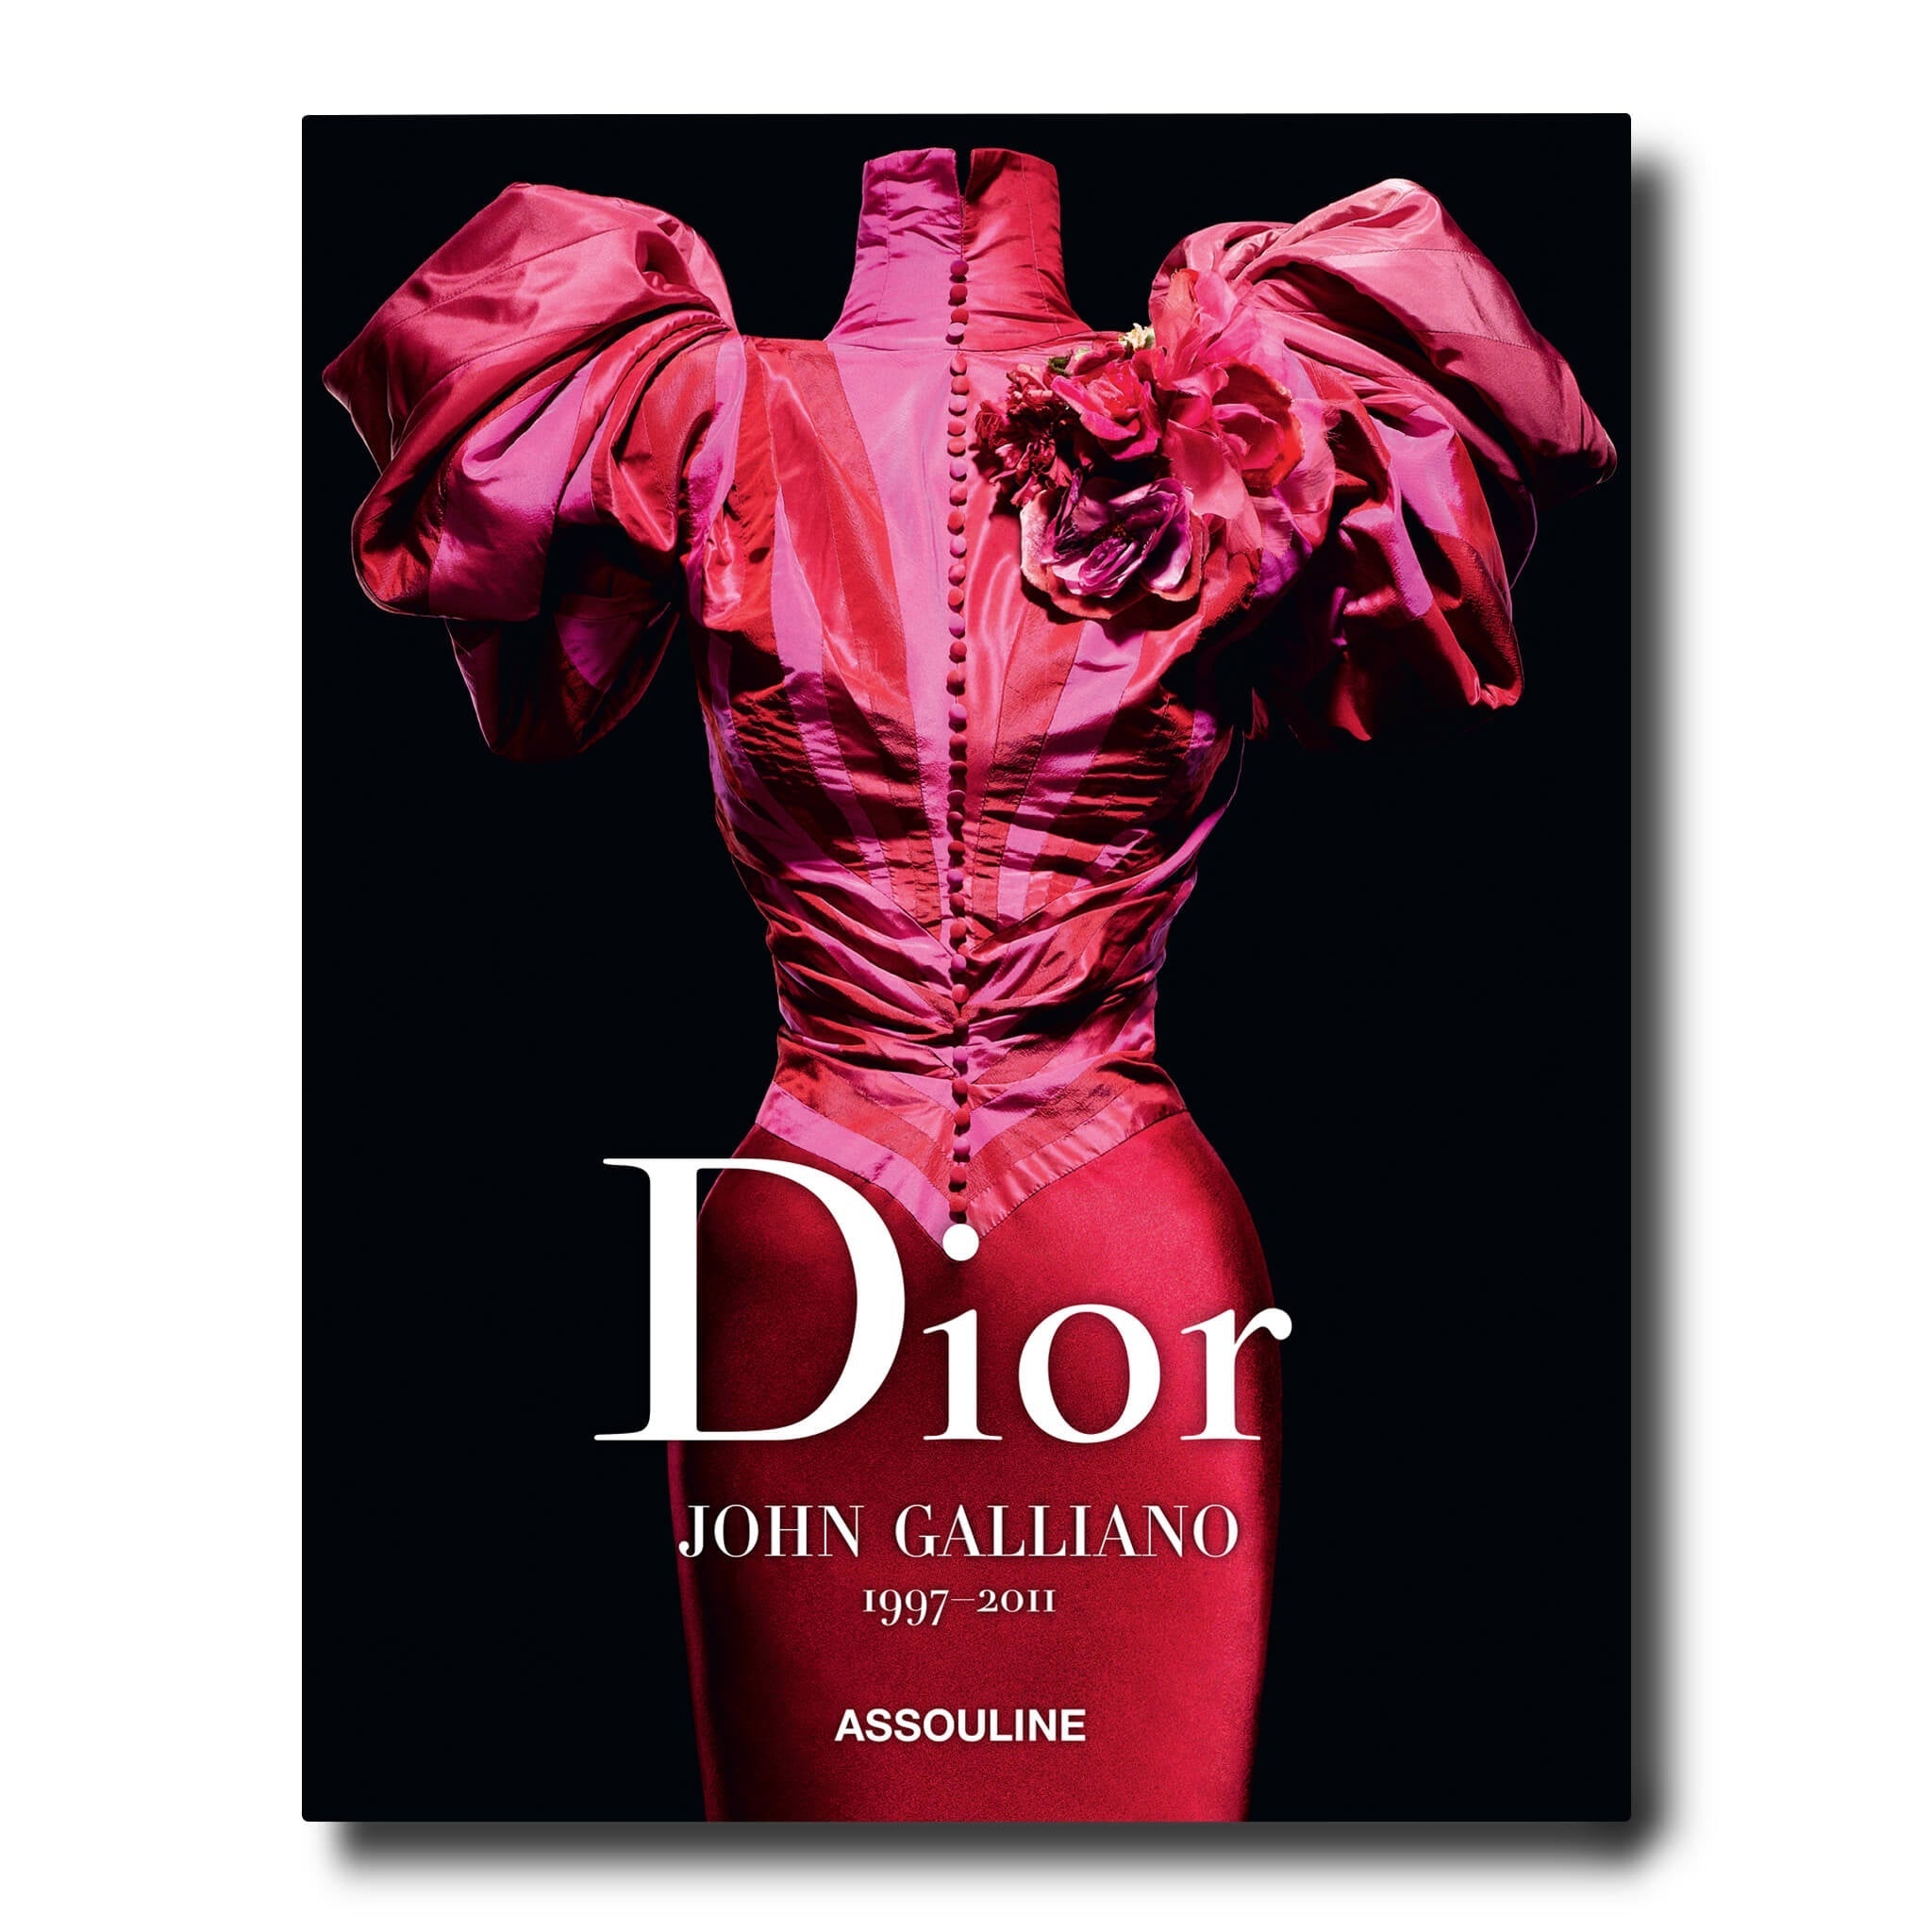 Photographing John Galliano's theatrical world